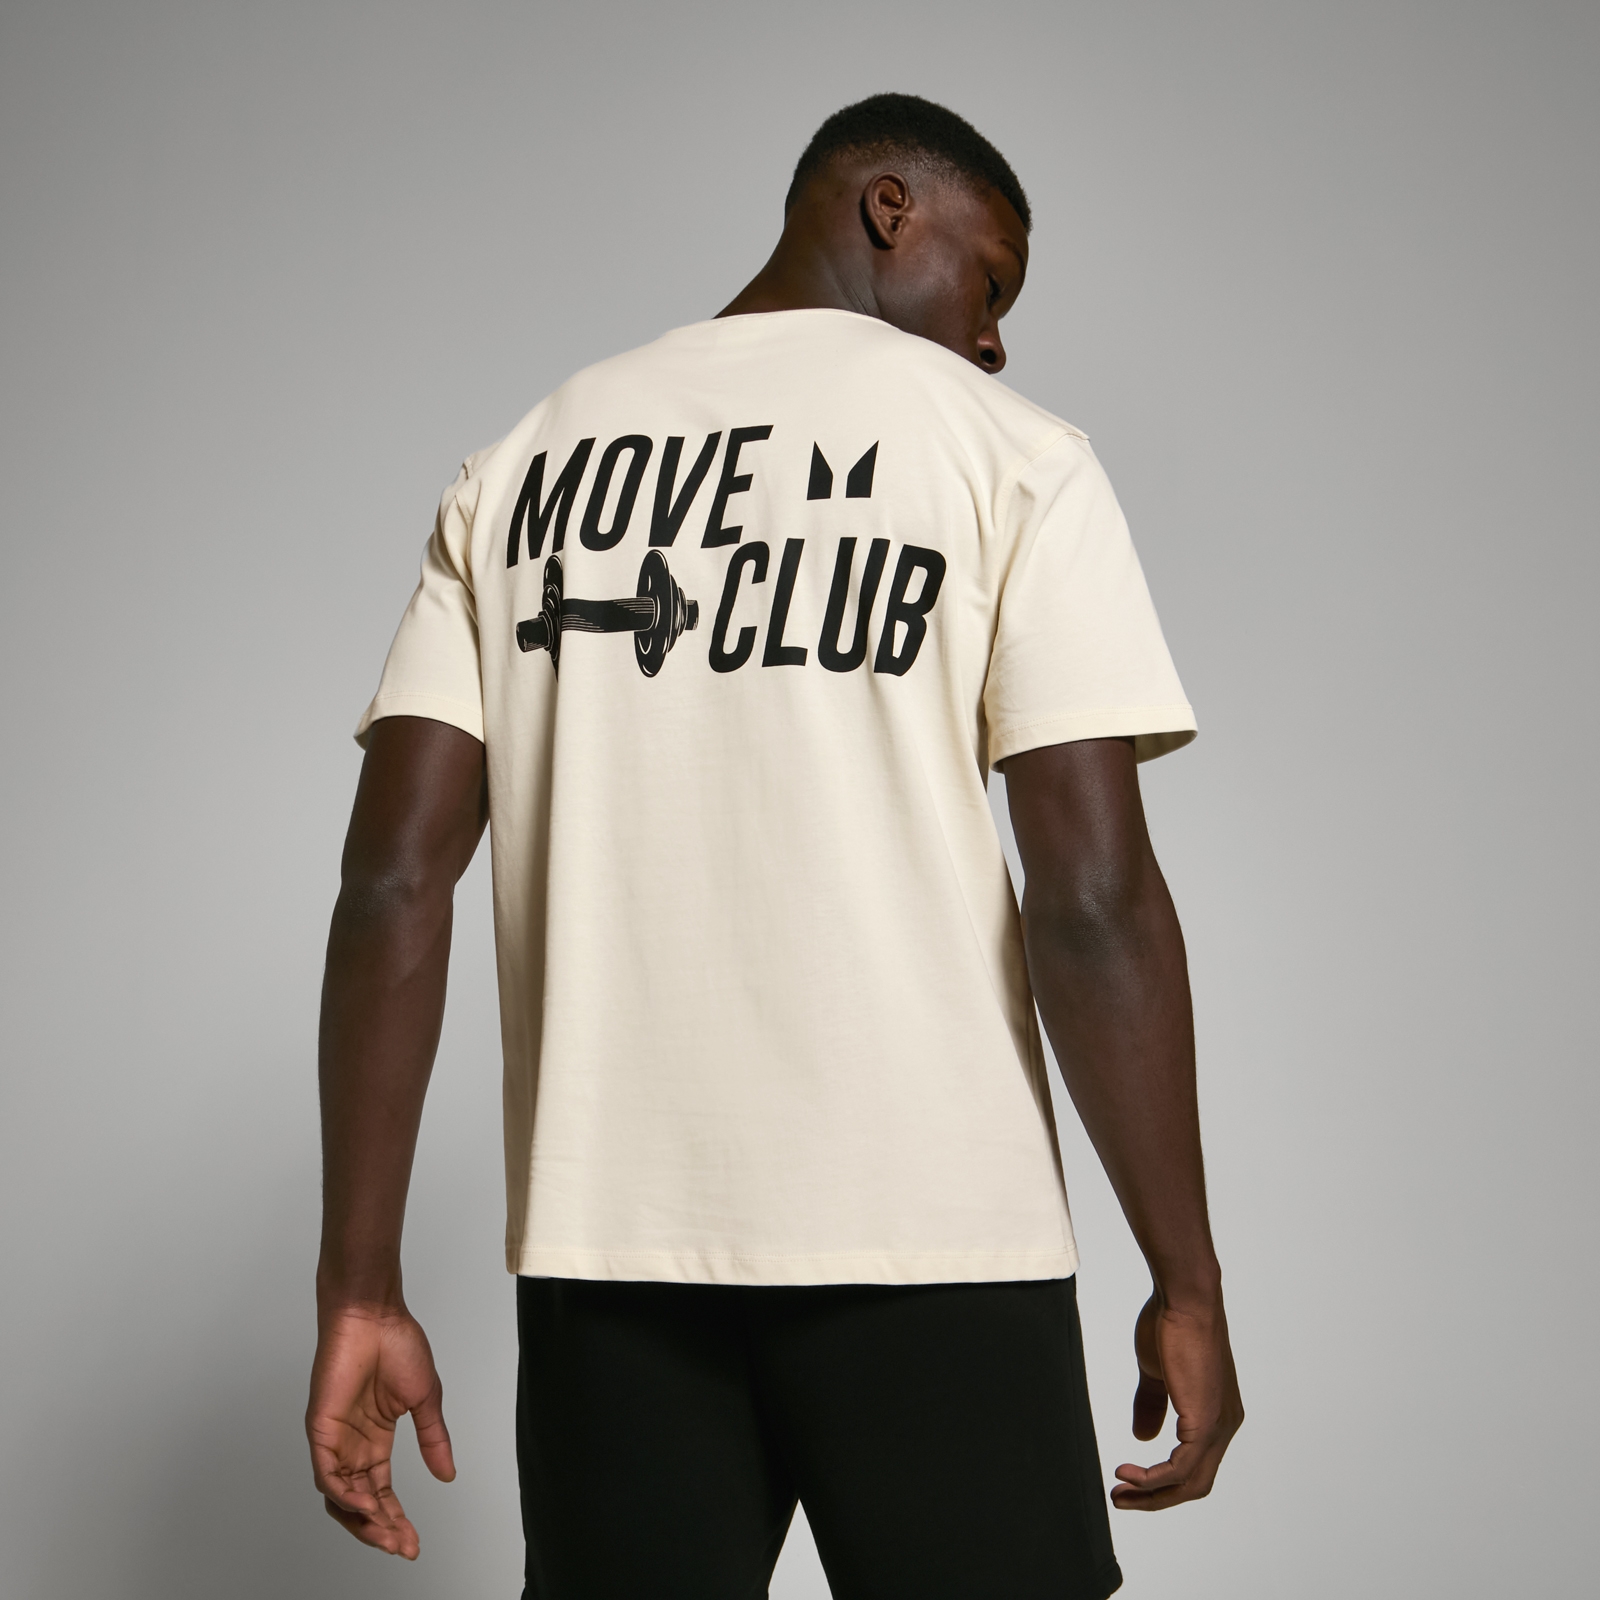 Camiseta extragrande Move Club de MP - Blanco vintage - XXS - XS